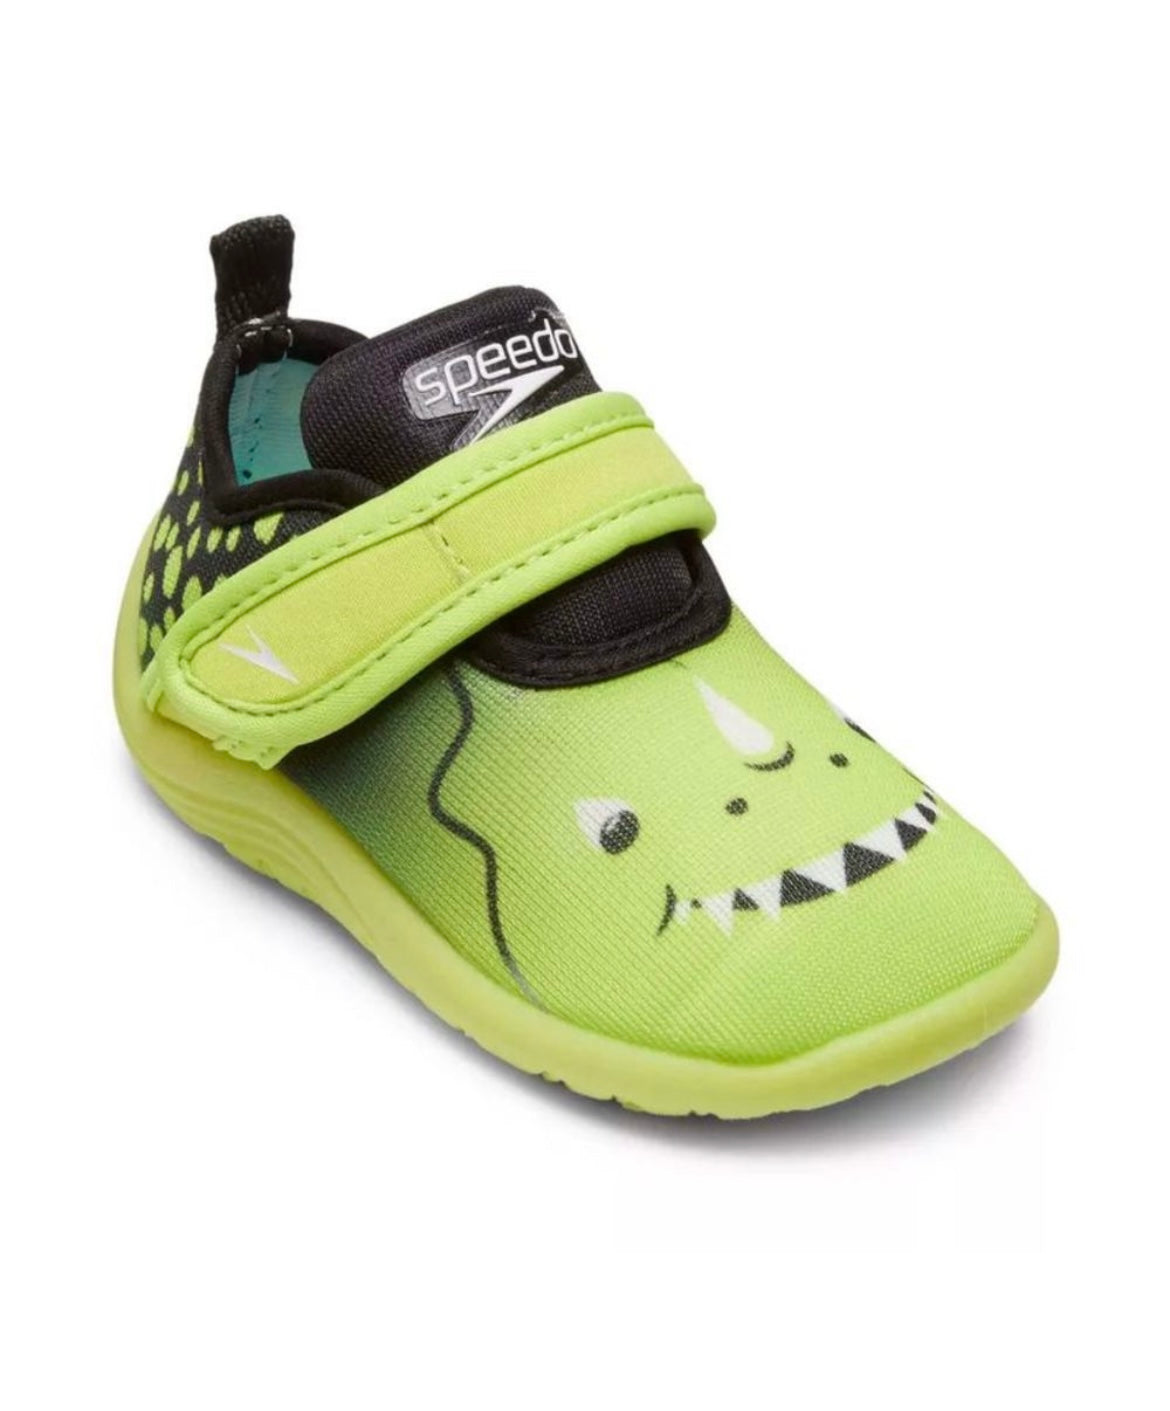 Speedo Boys' Hybrid Water Shoes Dinosaur